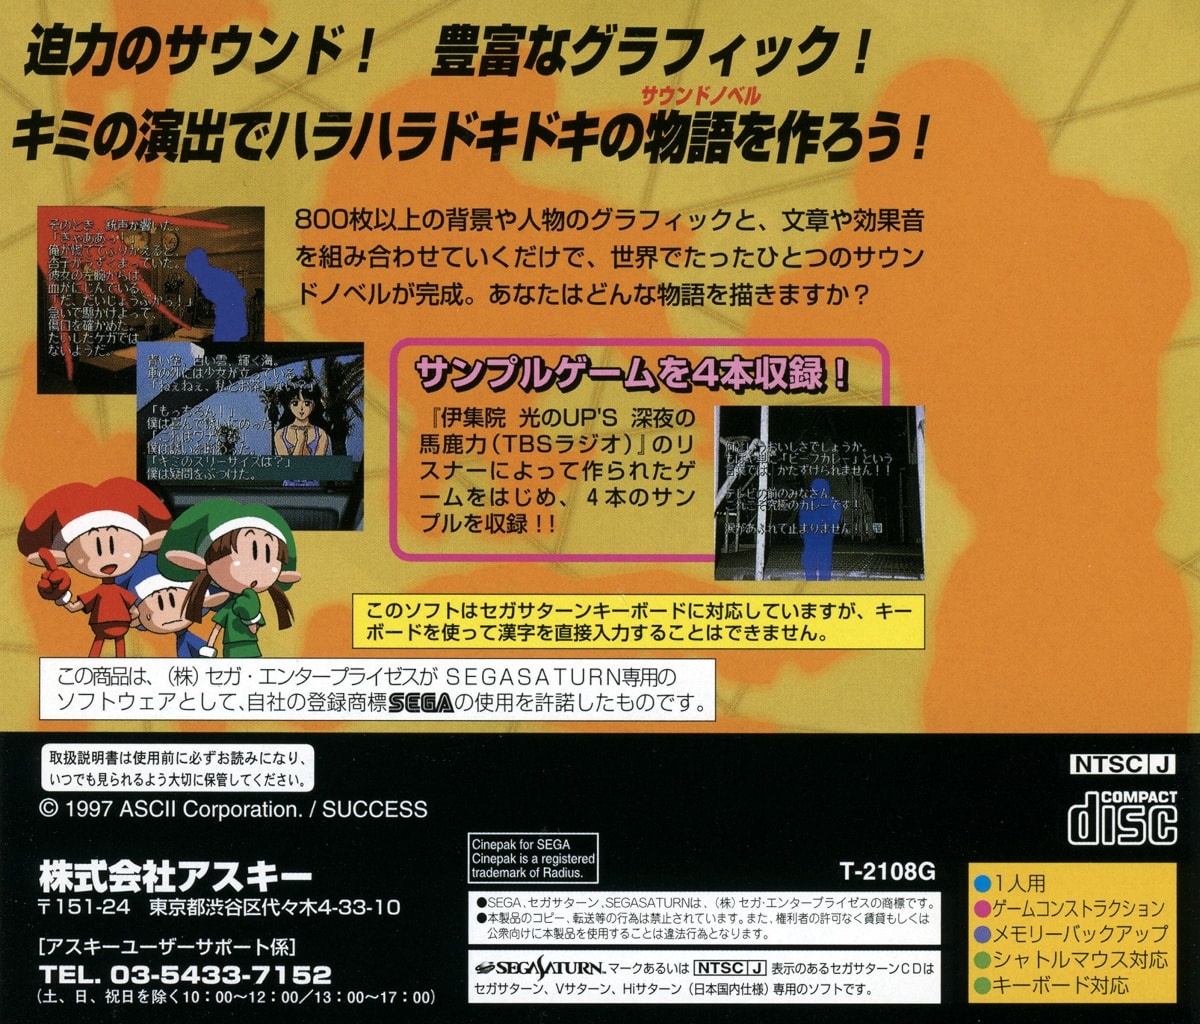 Capa do jogo Sound Novel Tsukuru 2